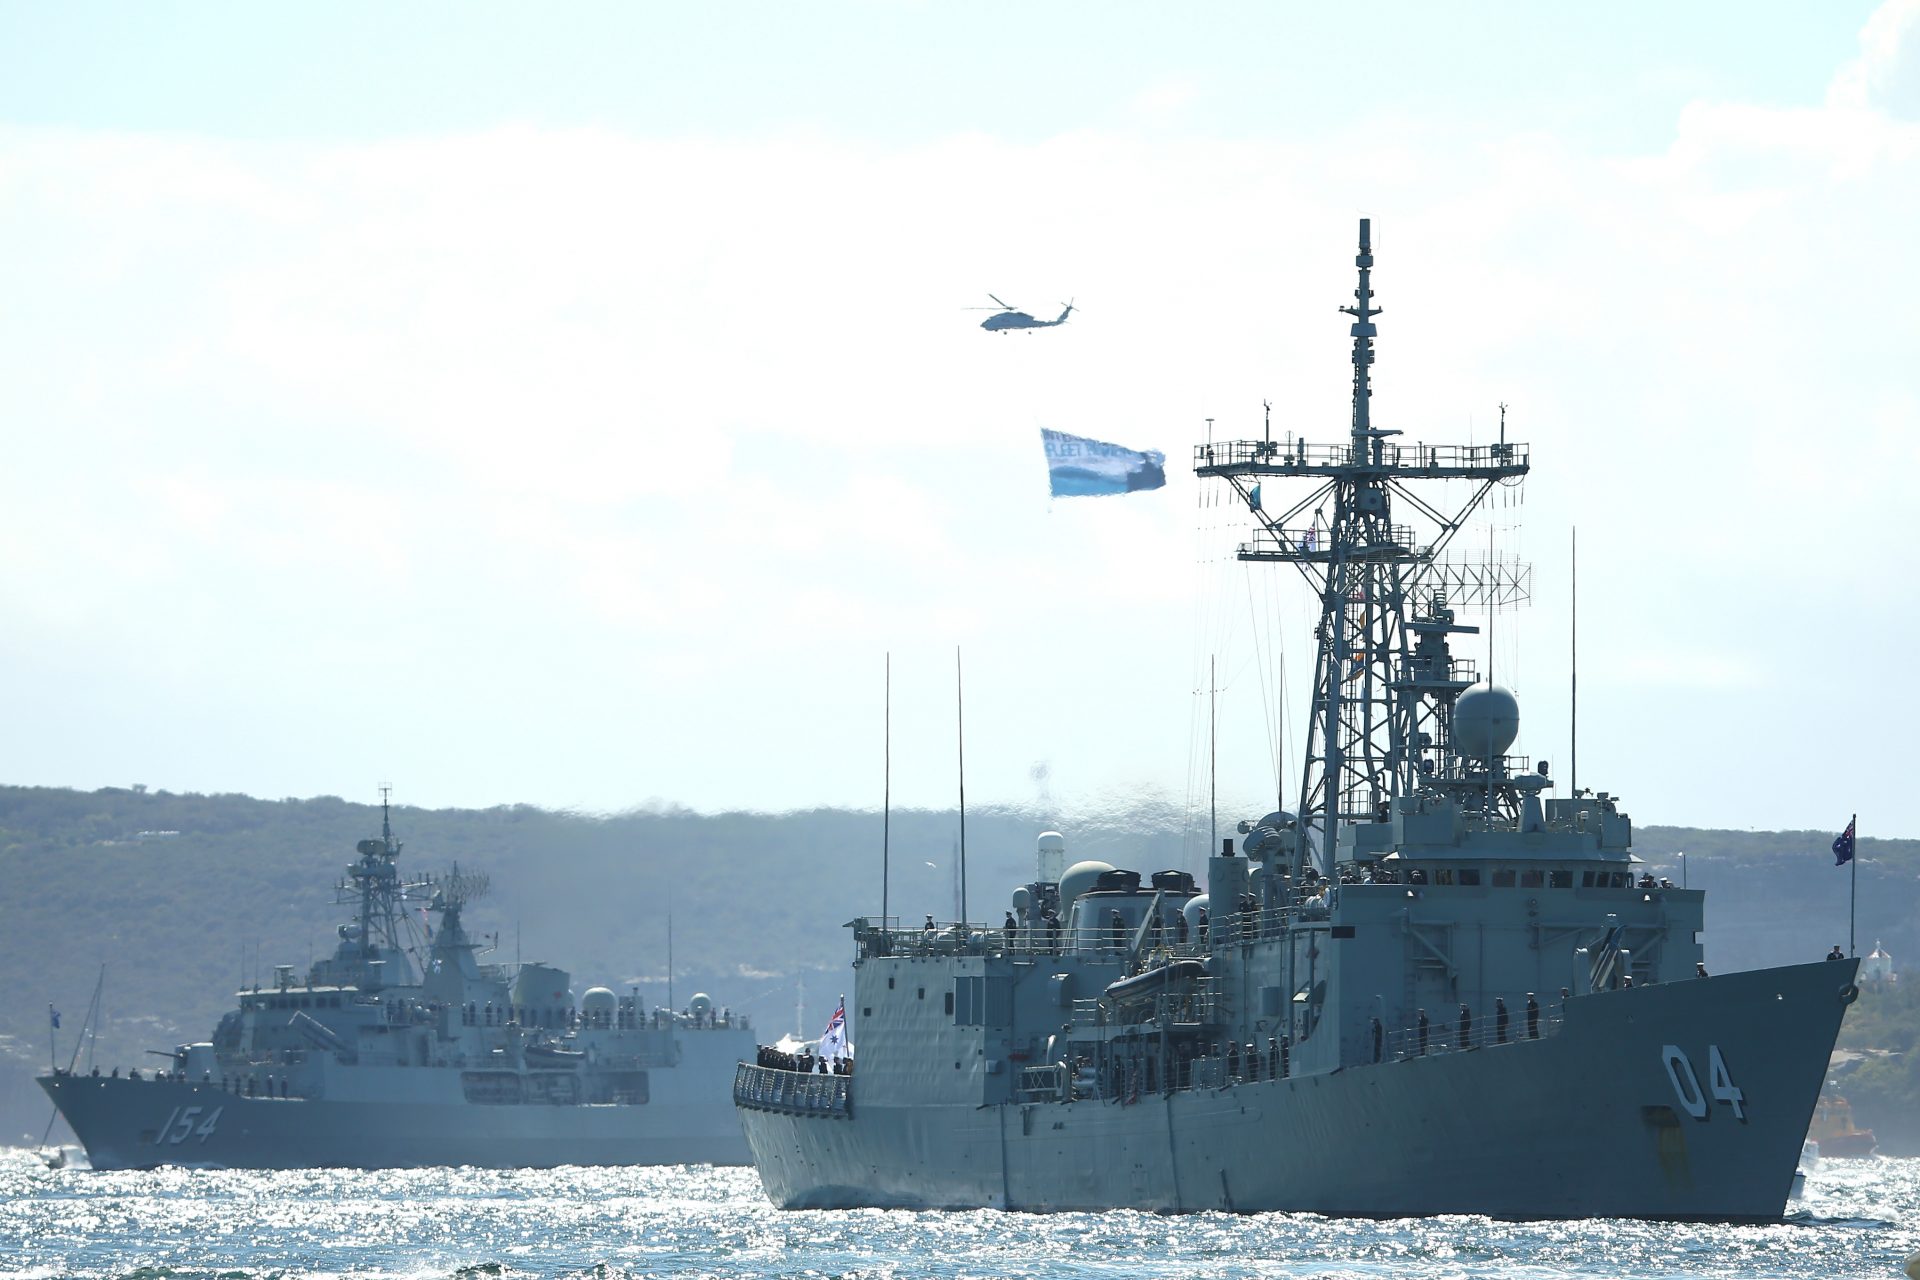 Biggest navy build-up since World War II